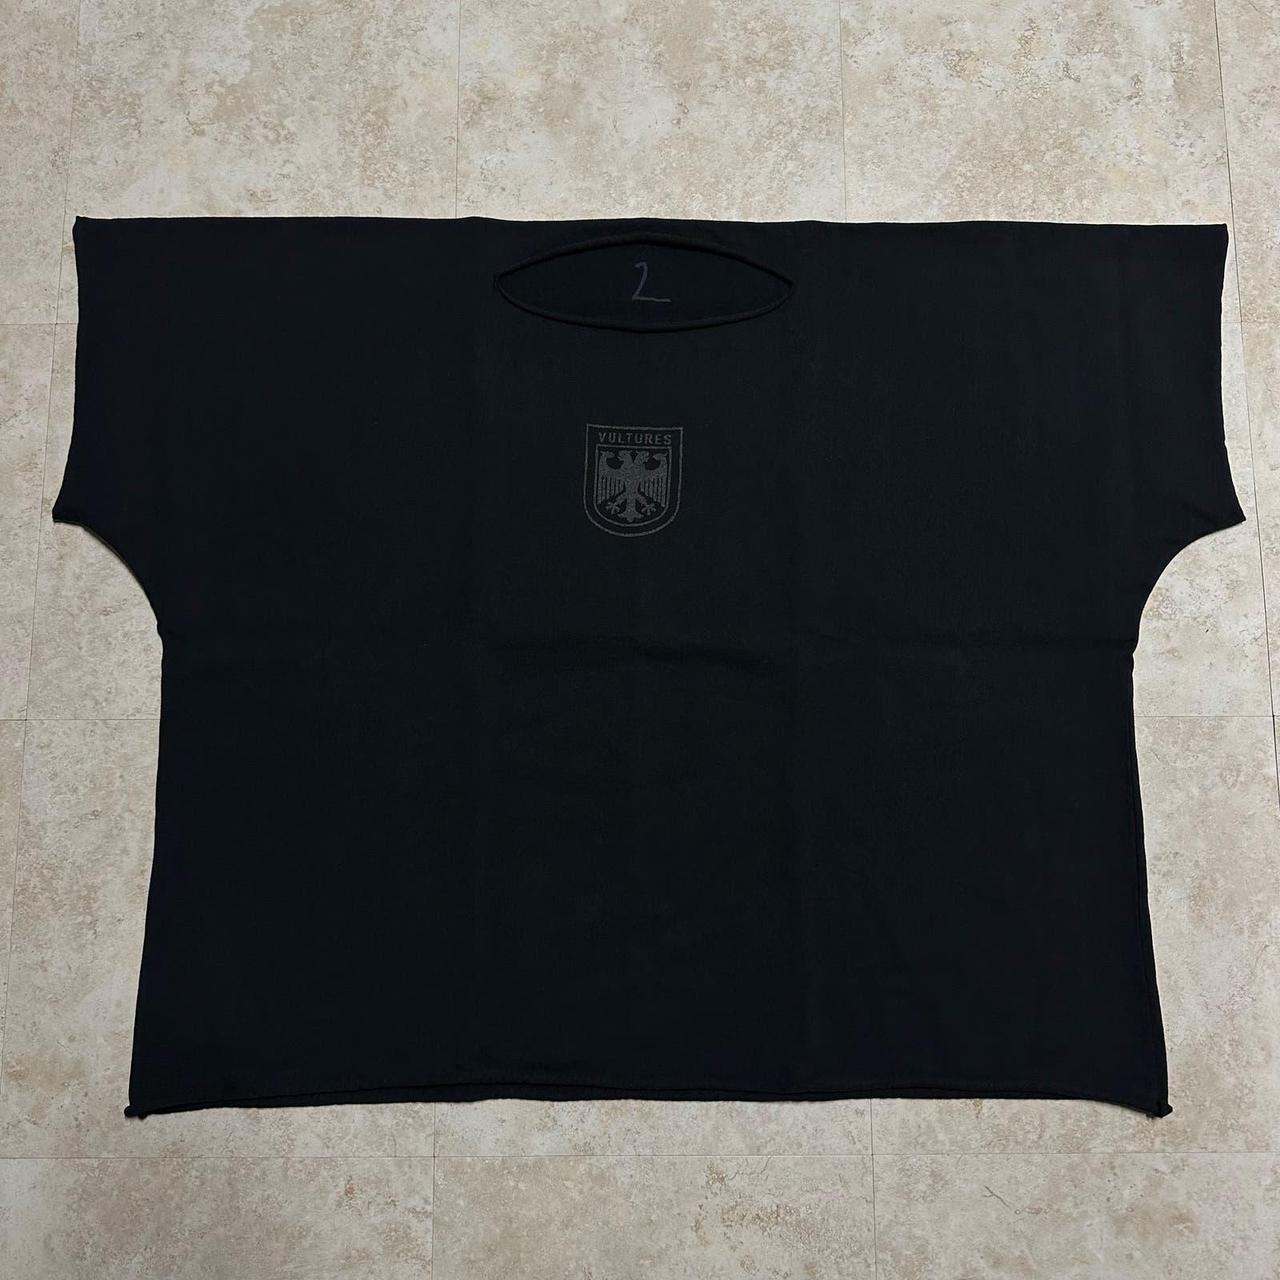 Yeezy Vultures Box T-shirt Size 2 Kanye West, 29”